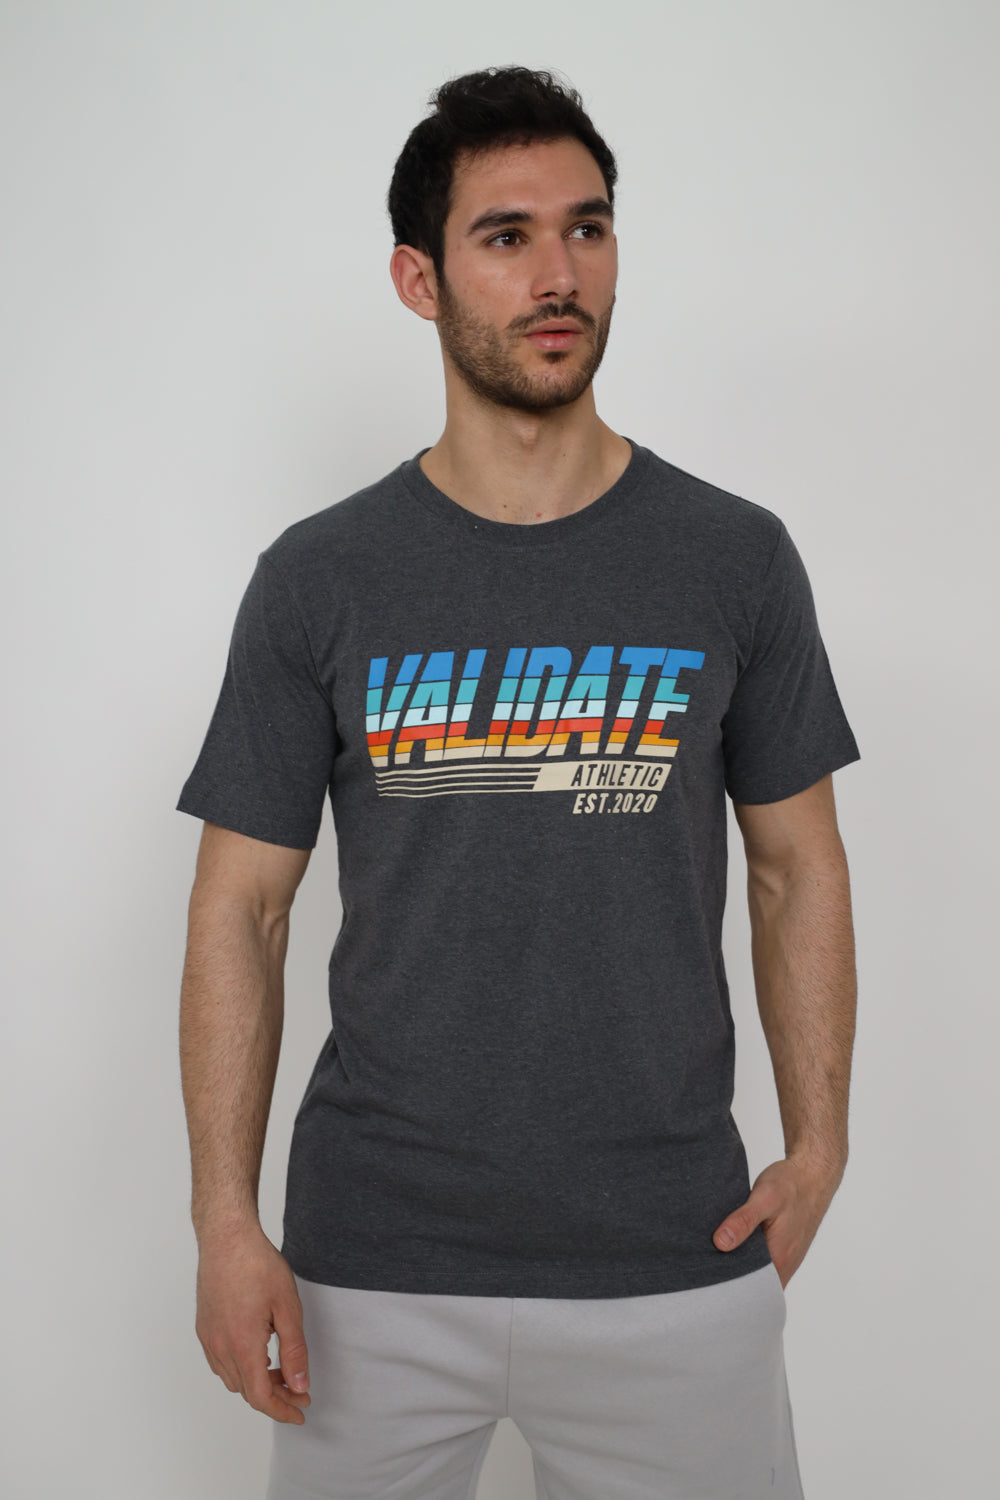 Validate Zach T-Shirt Charcoal